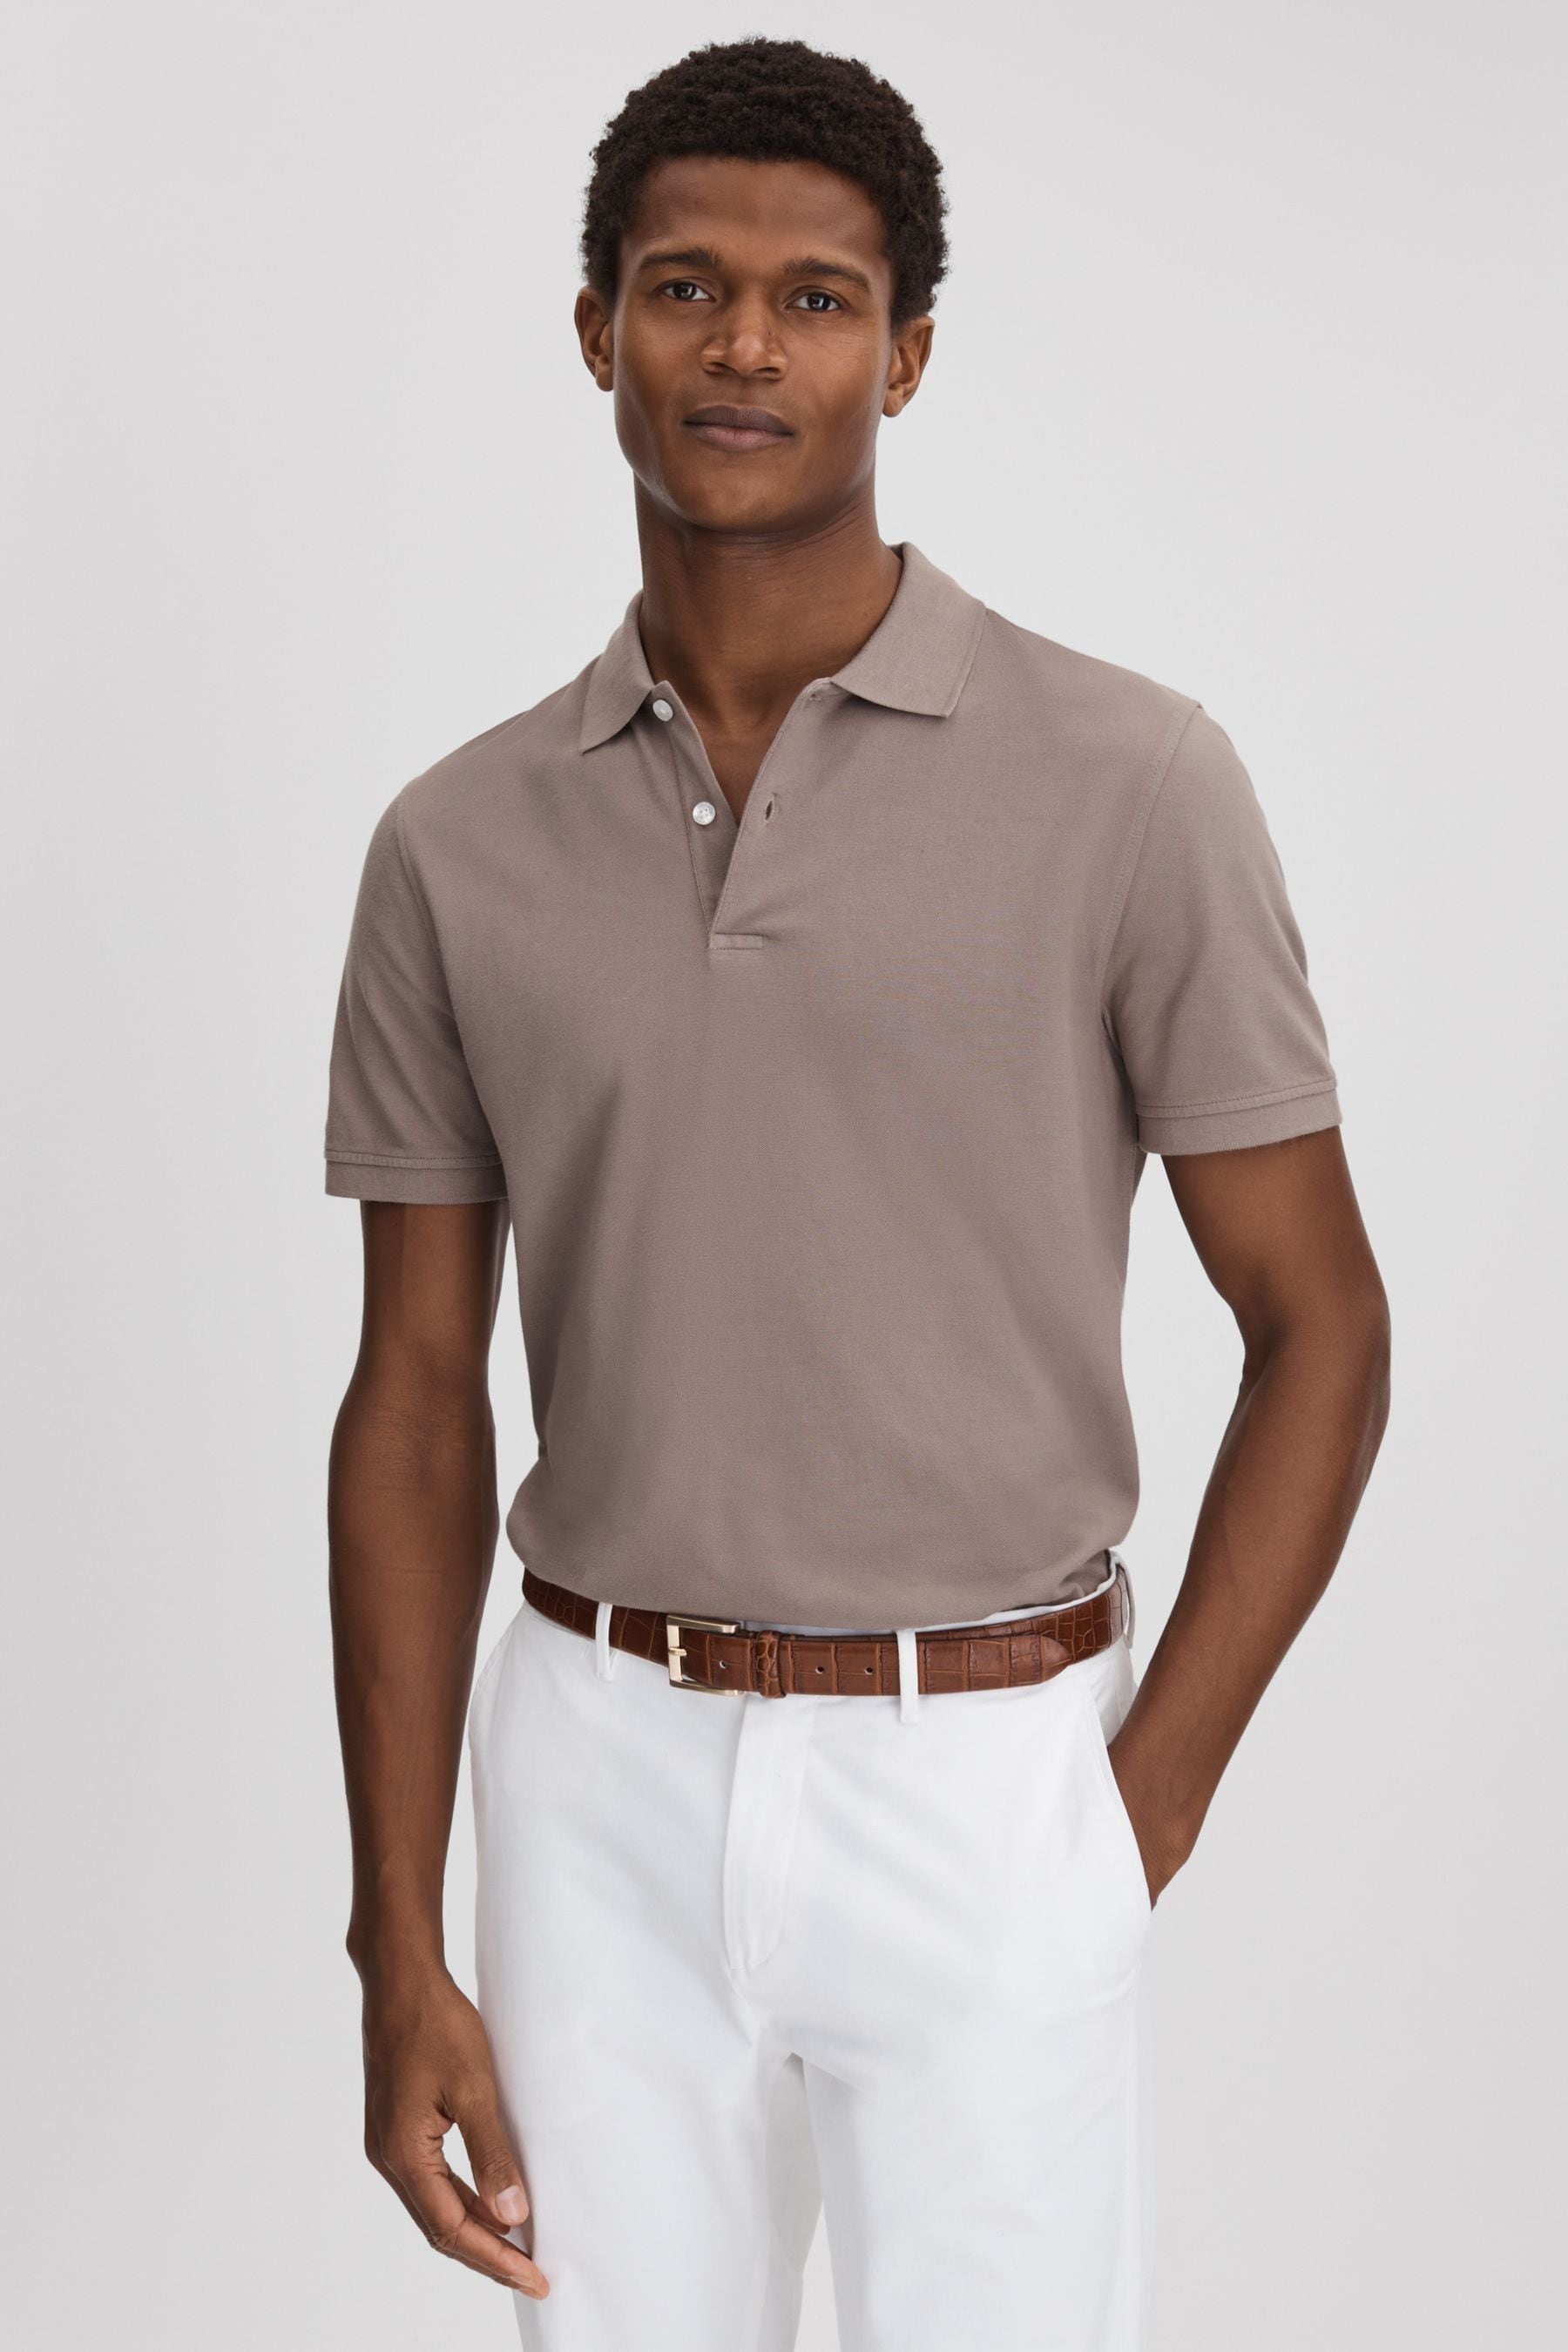 Reiss Puro - Dark Taupe Garment Dyed Cotton Polo Shirt, M